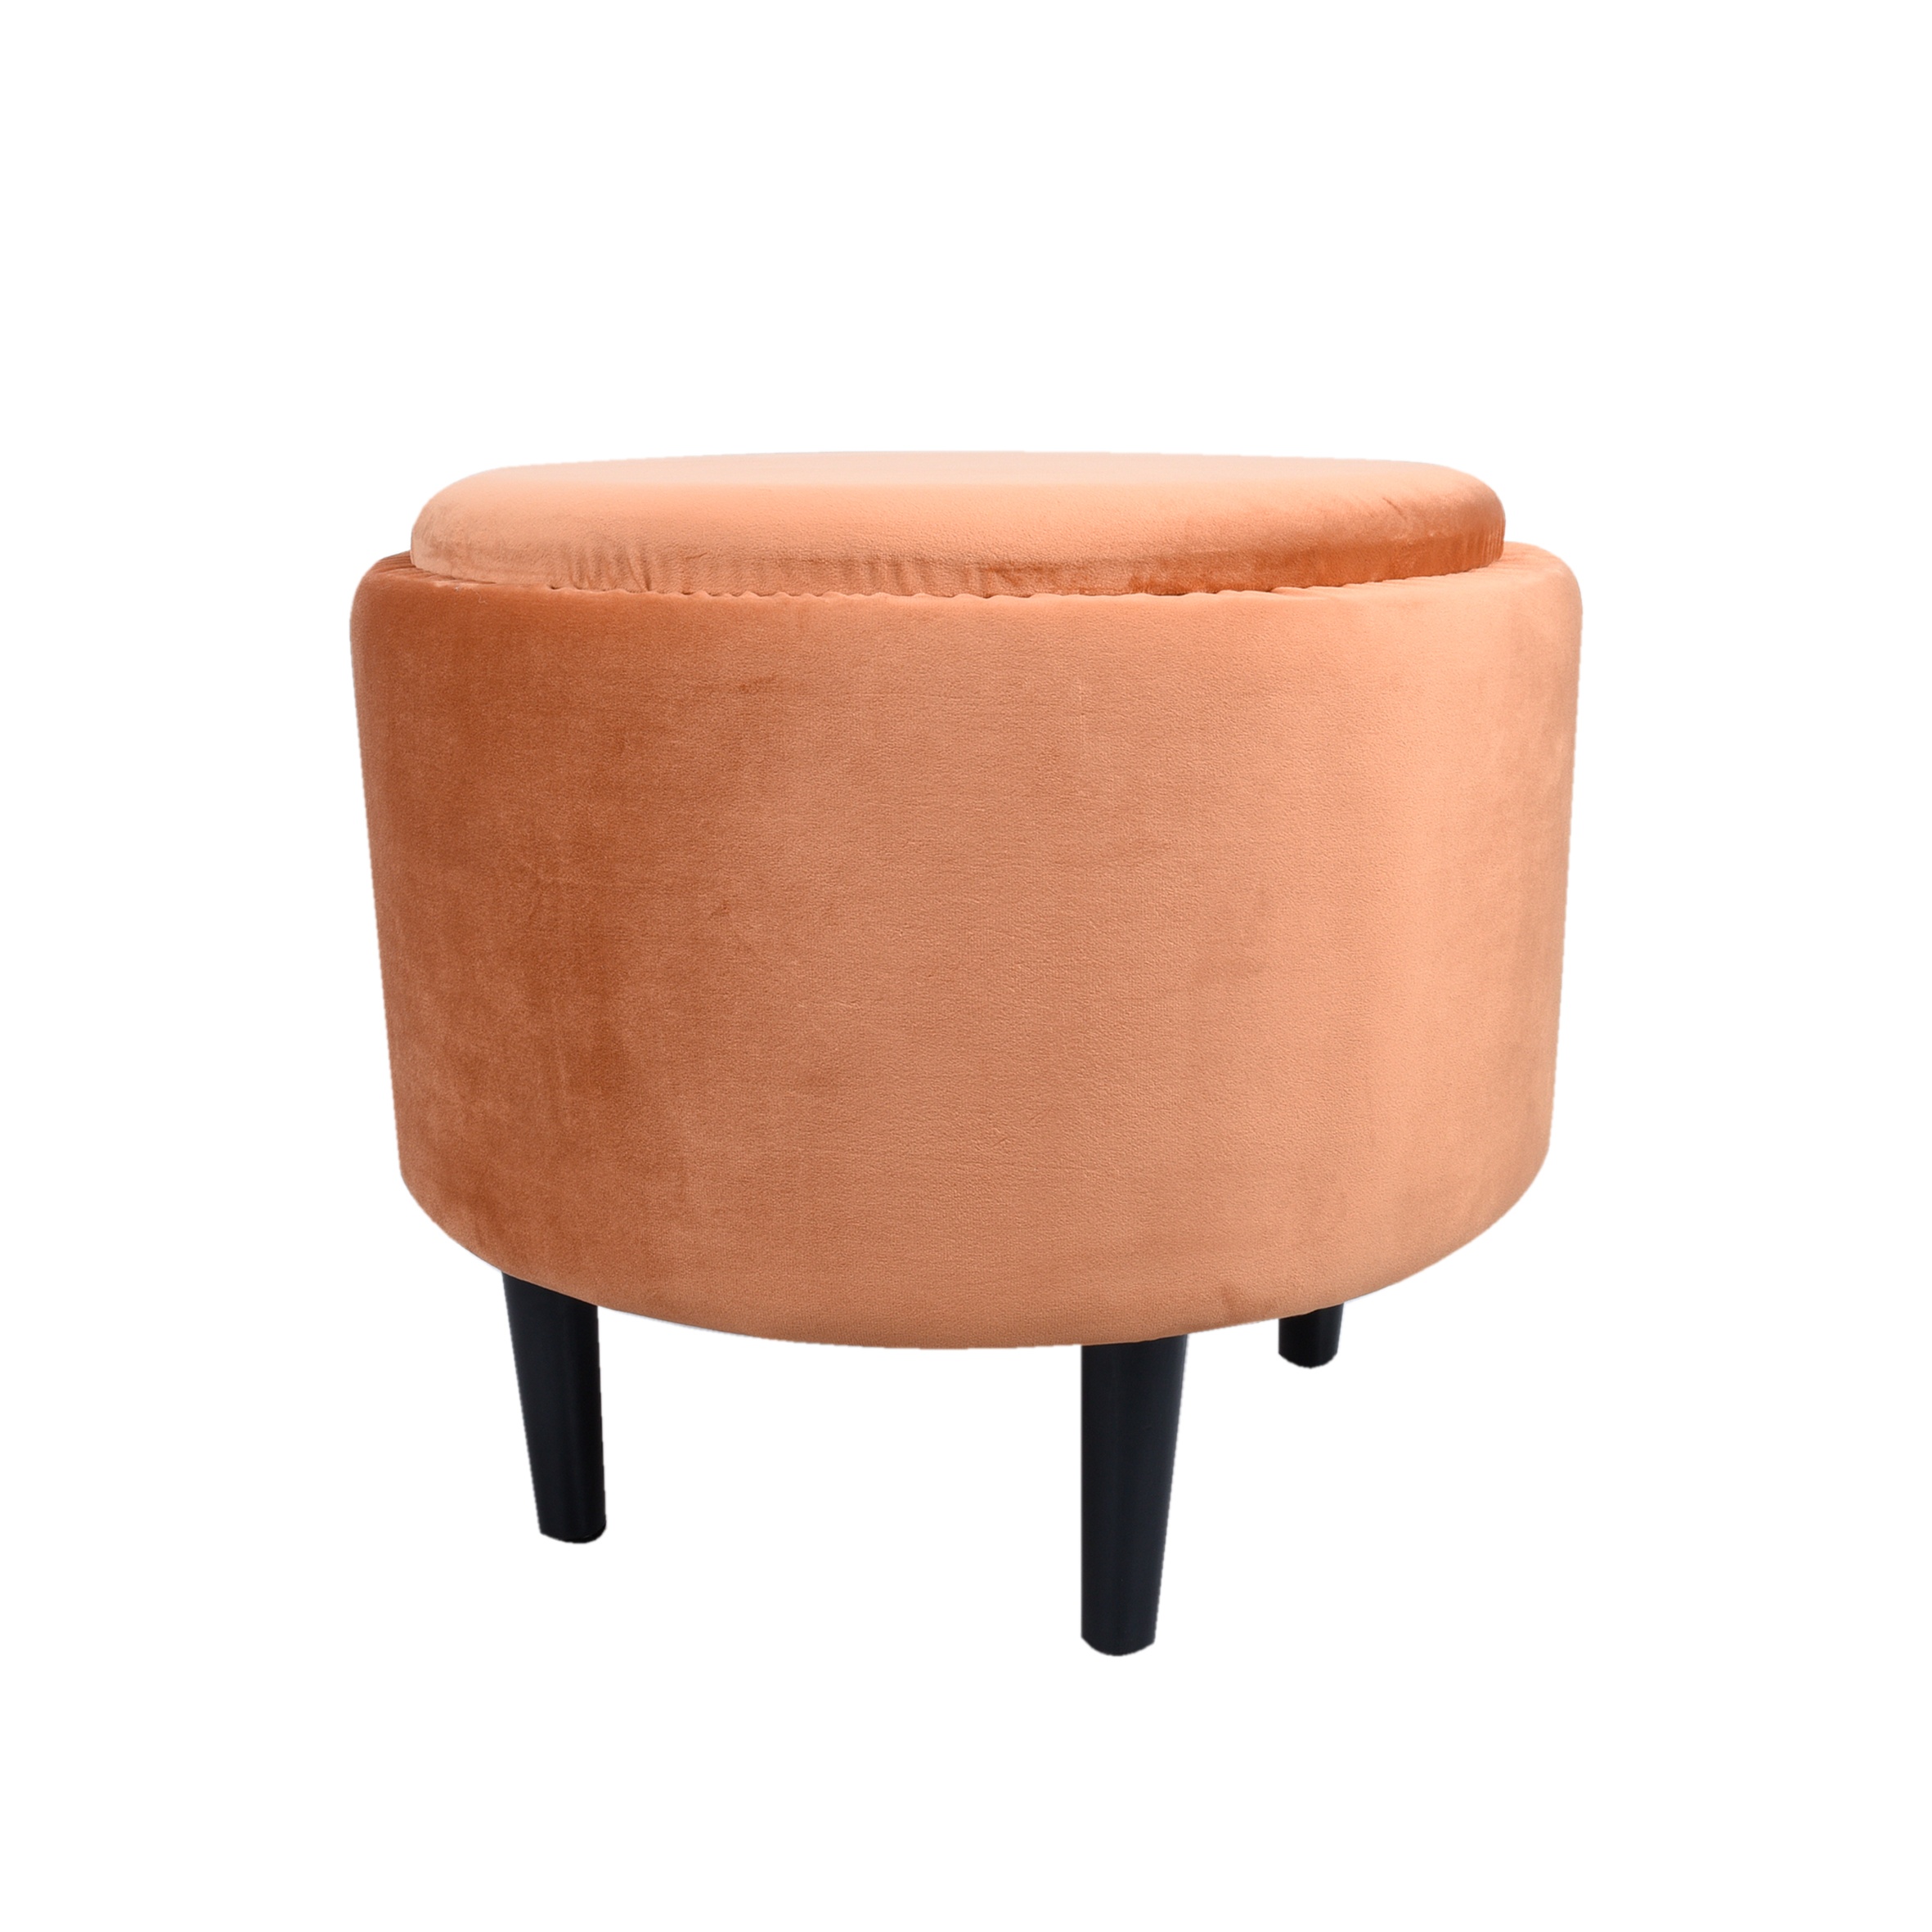 Modern Living Room luxury chair velvet round storage stool with wood black legs